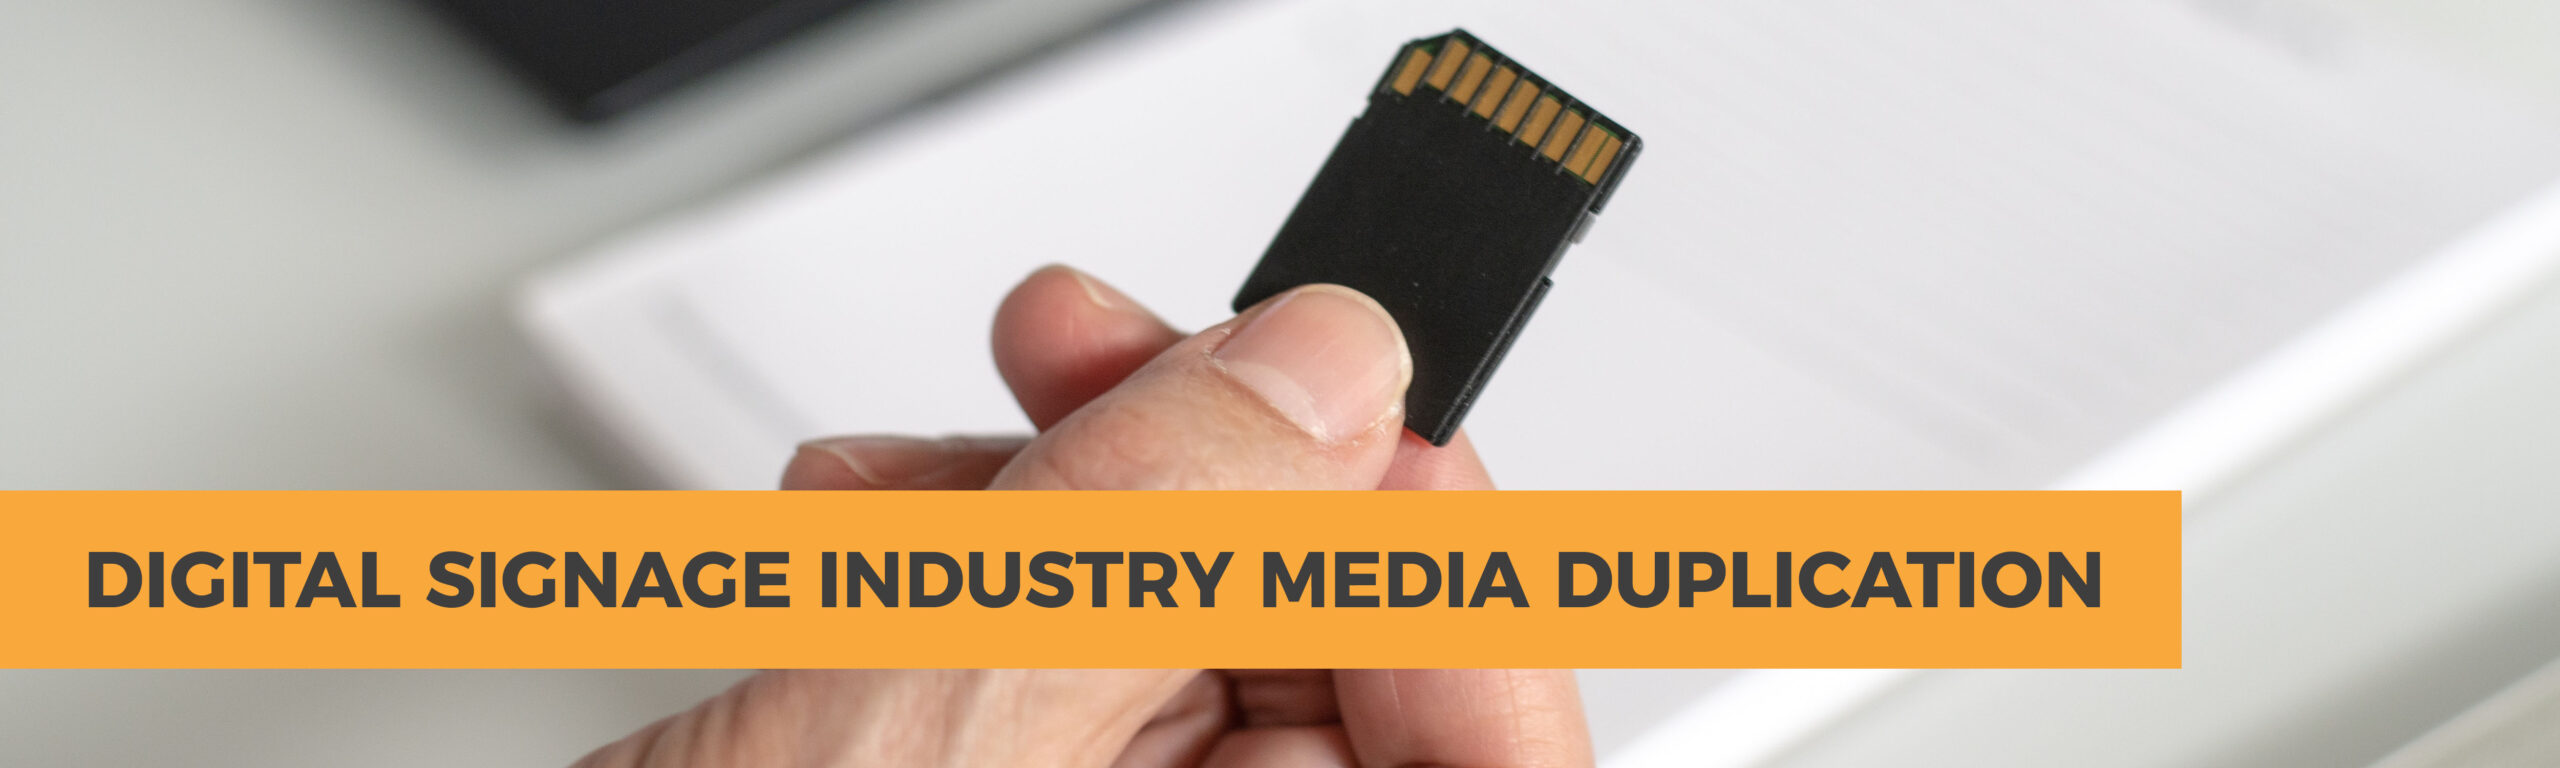 Digital Signage Industry Media Duplication